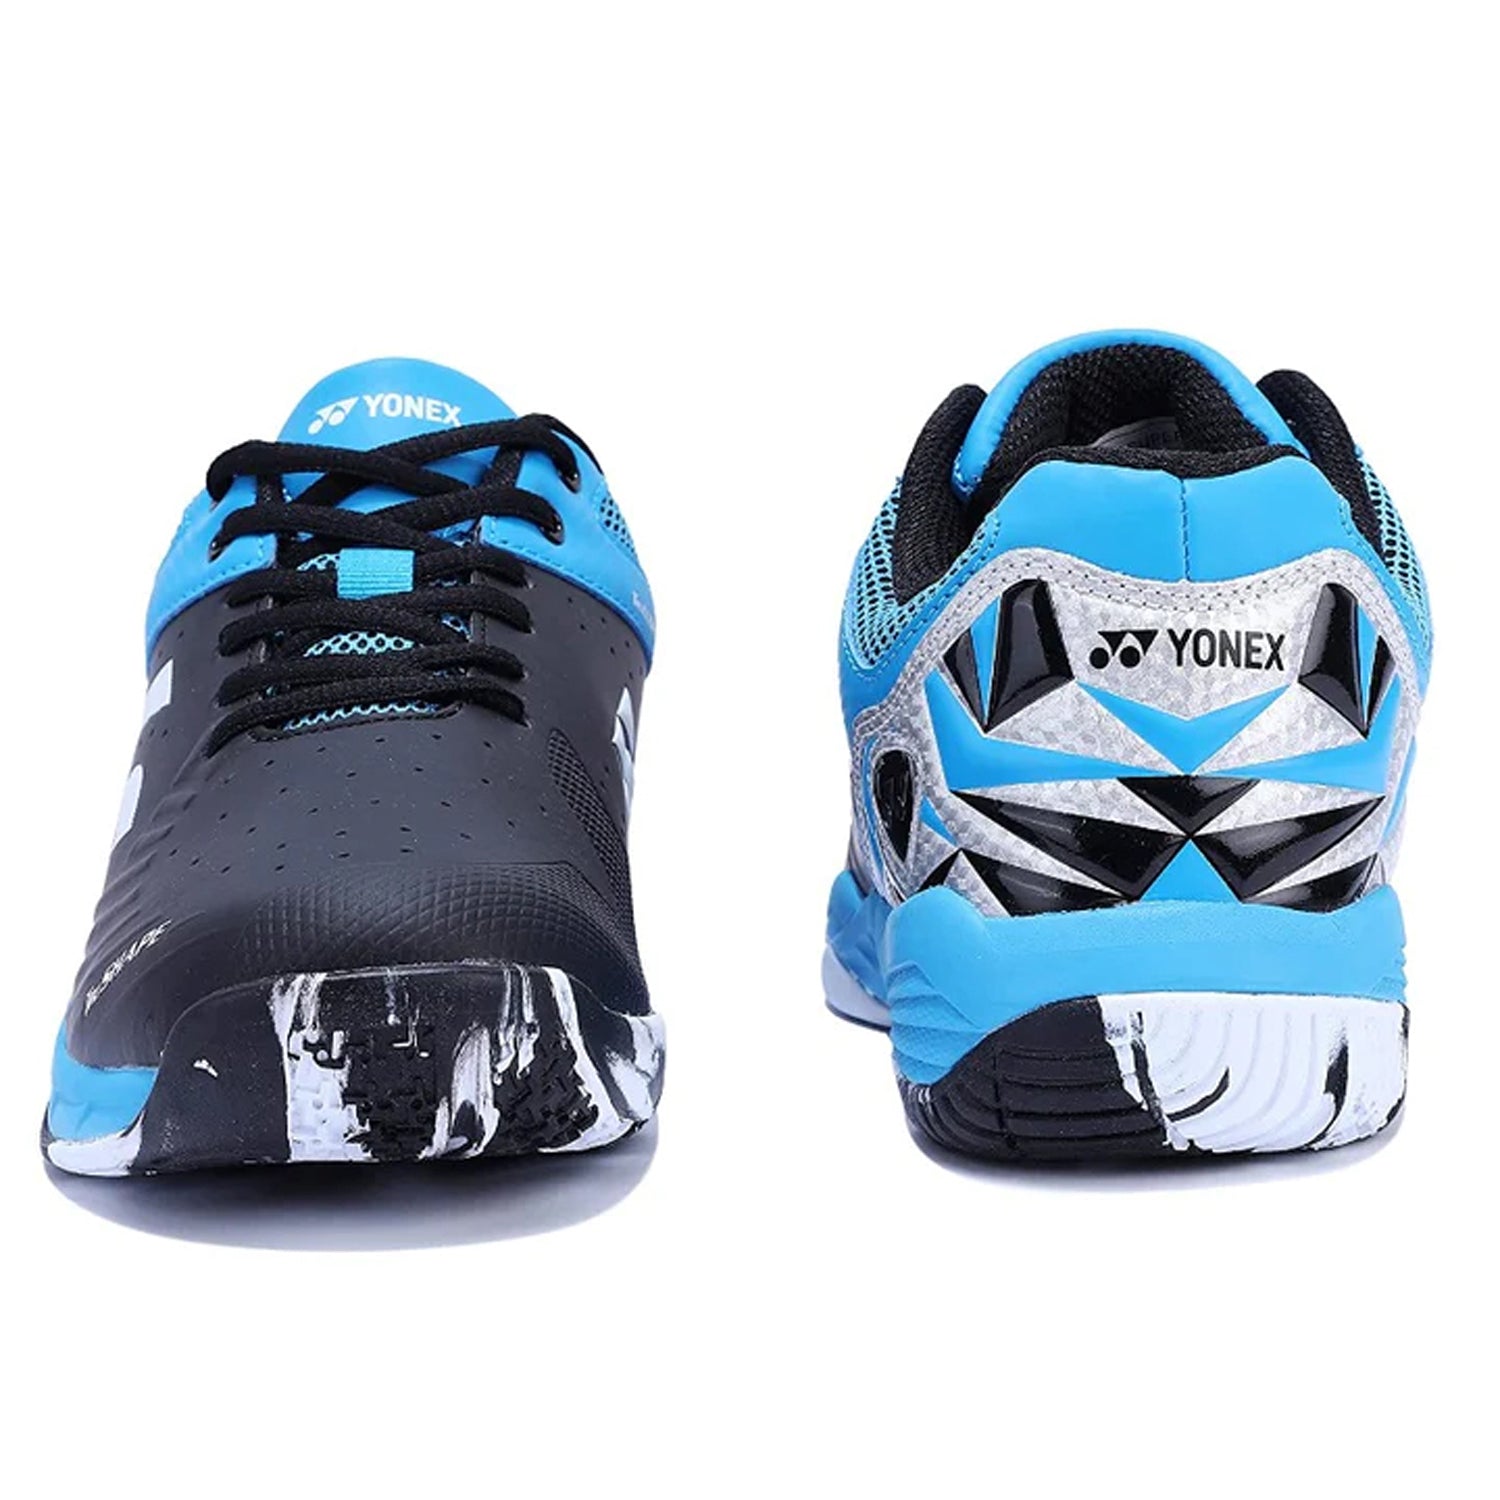 Yonex Akayu Super 6 Badminton Shoes